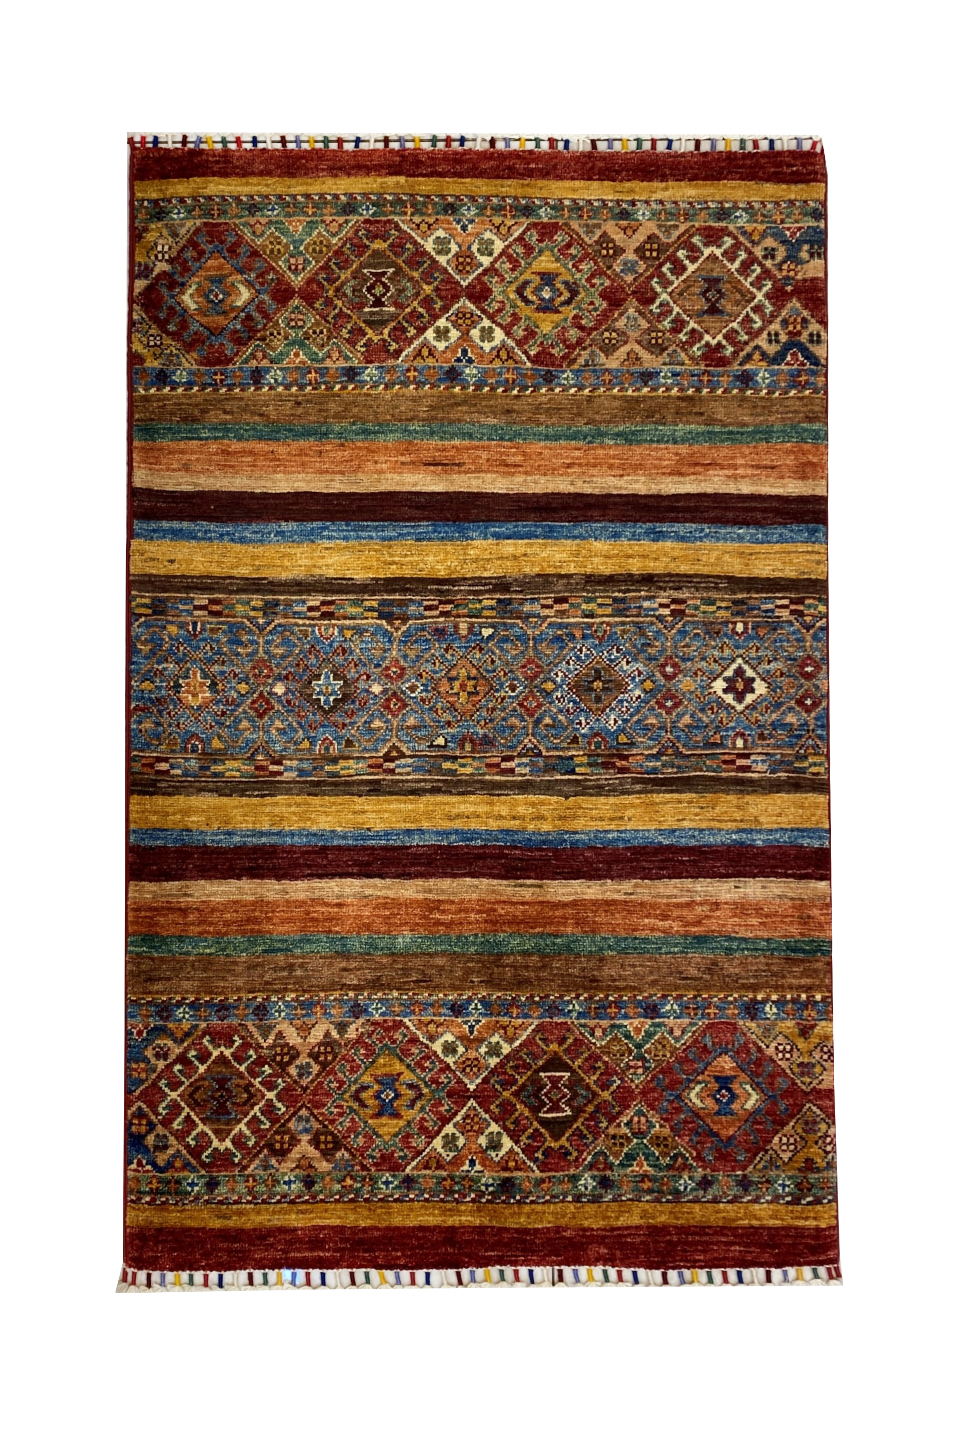 Şirvan Bicolor Carpet 126 x 82 cm